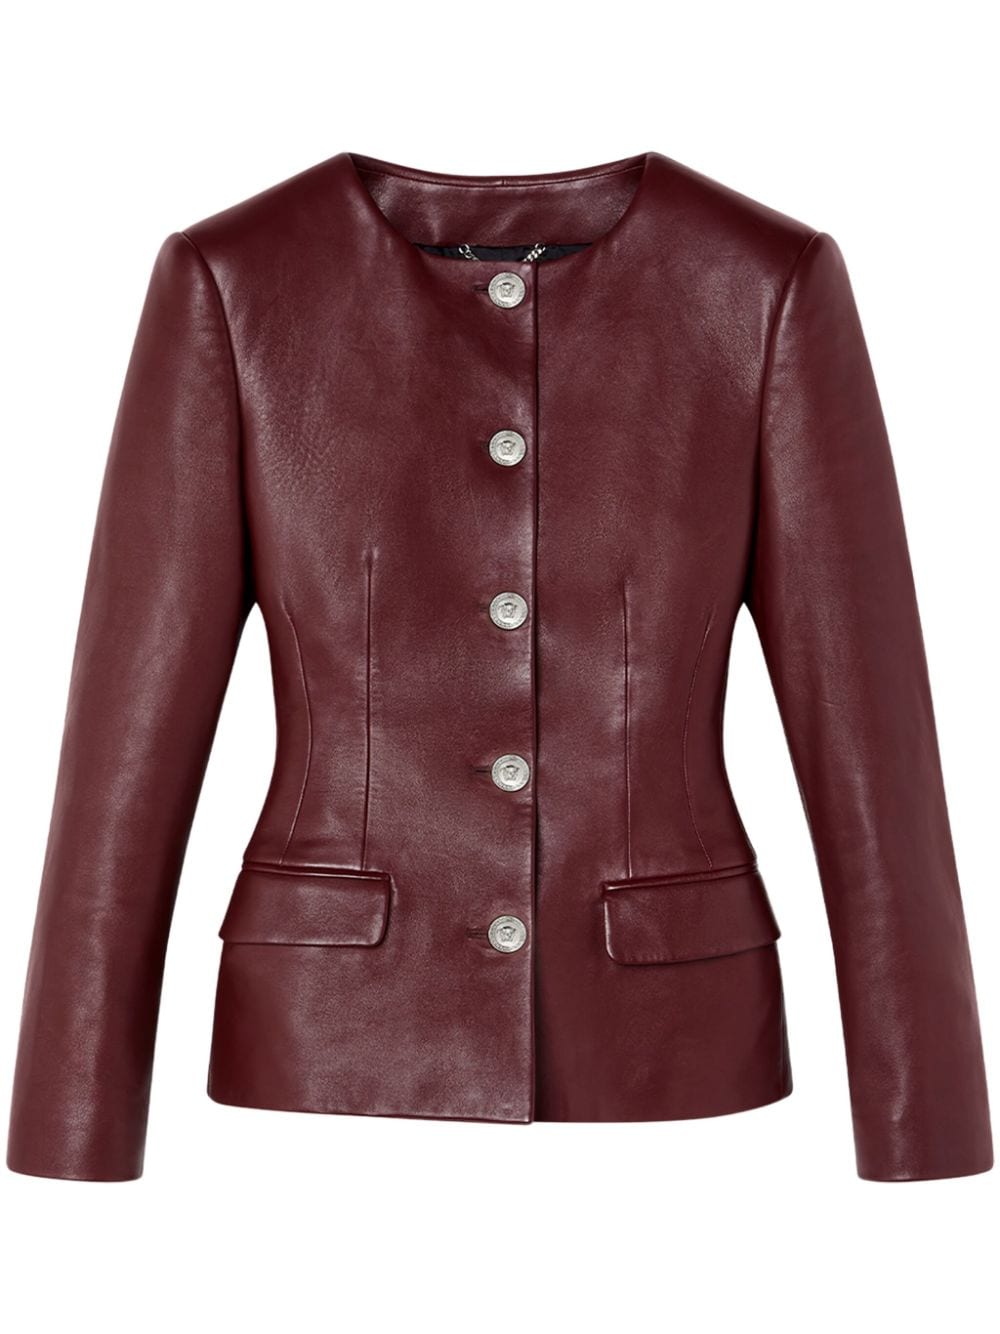 Classic leather coat